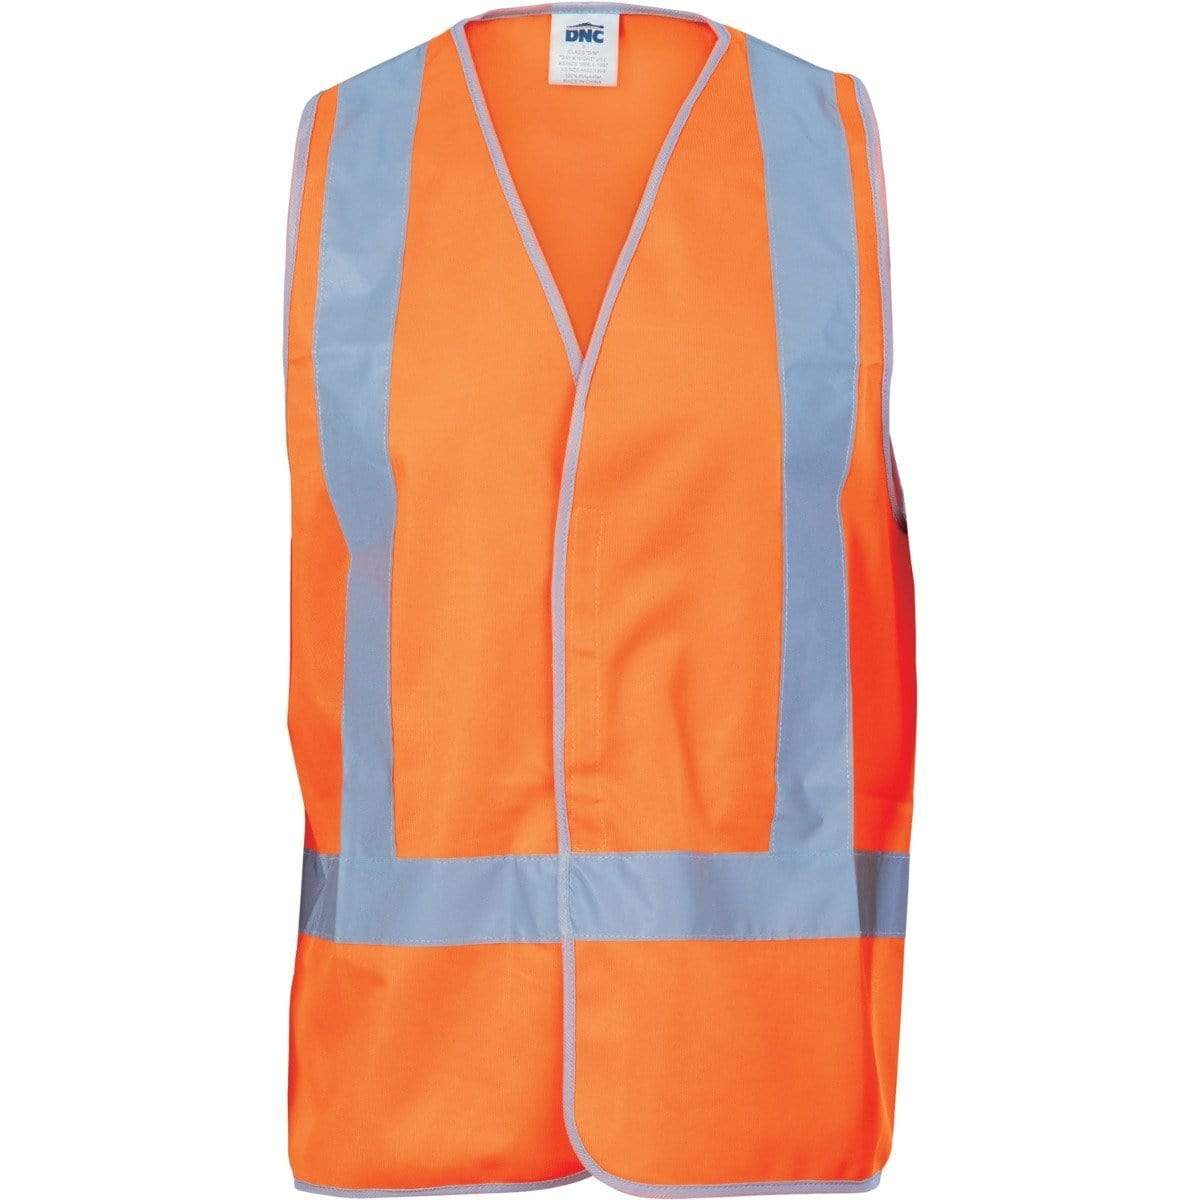 DNC Workwear Work Wear DNC WORKWEAR Day/Night Cross Back Safety Vest 3805